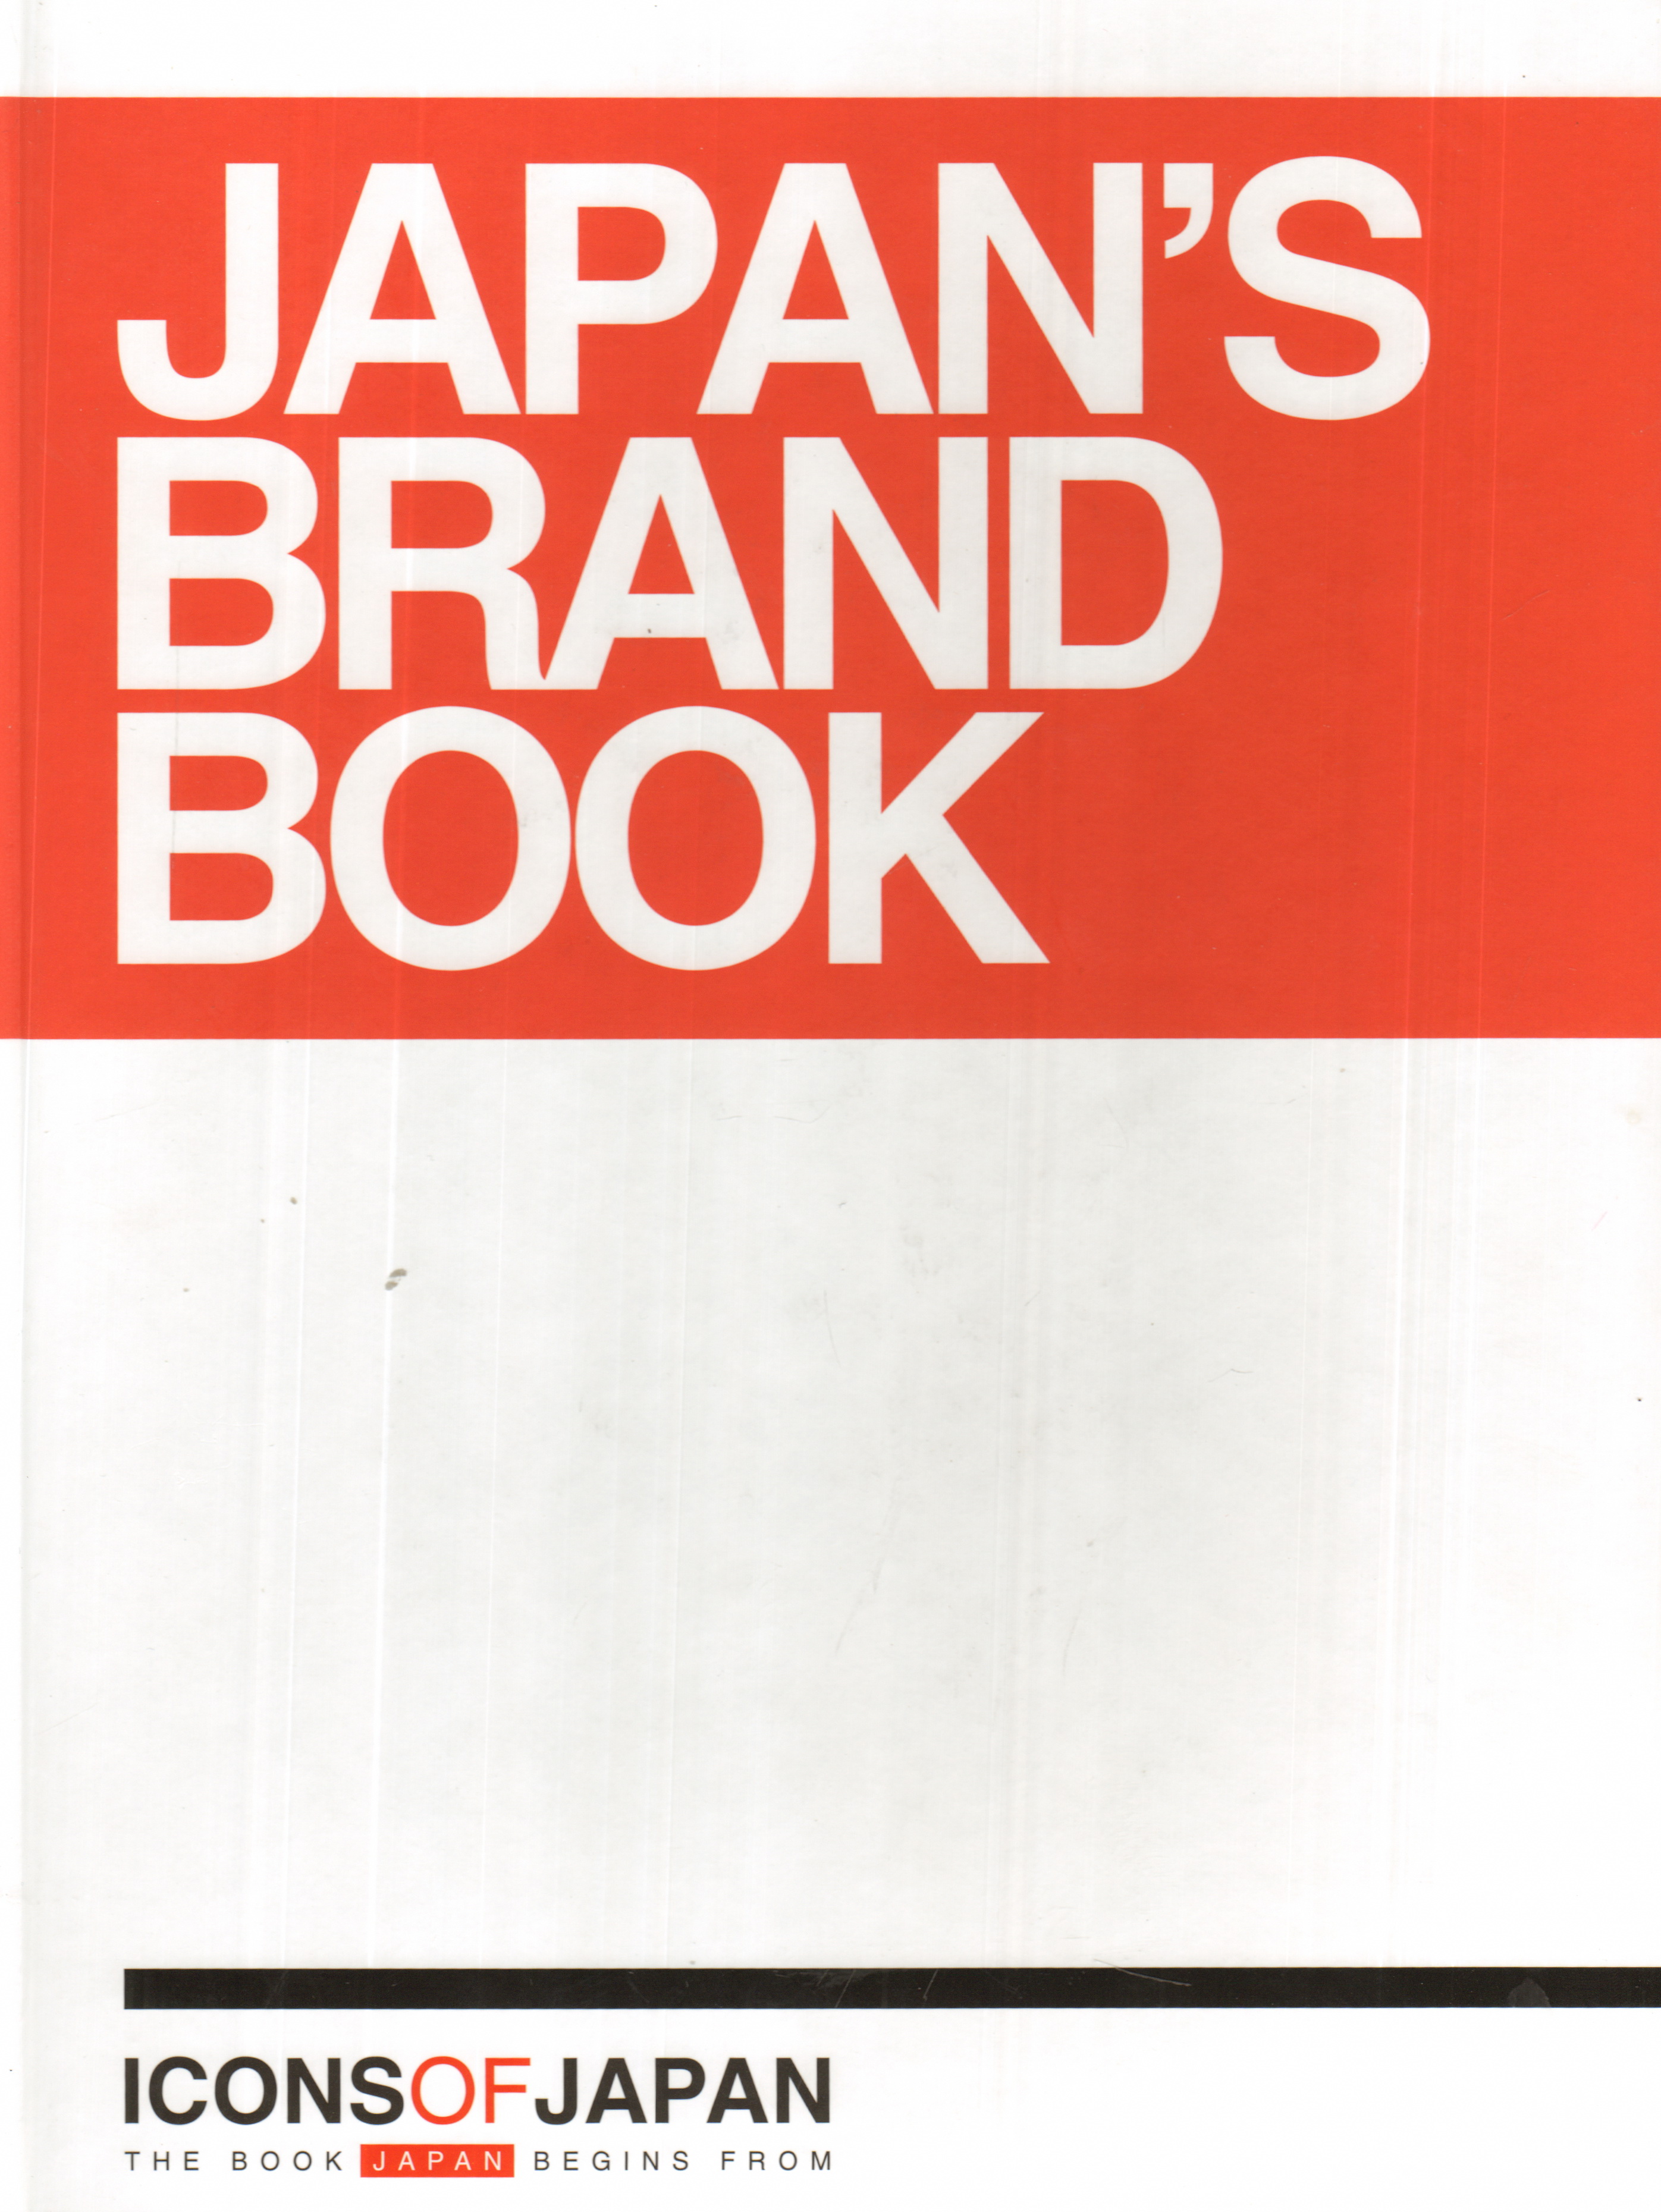 Япония книга купить. Japan book. Icons of Japan. Japan's brand book. Japanese brand book. Иконка японская книга.